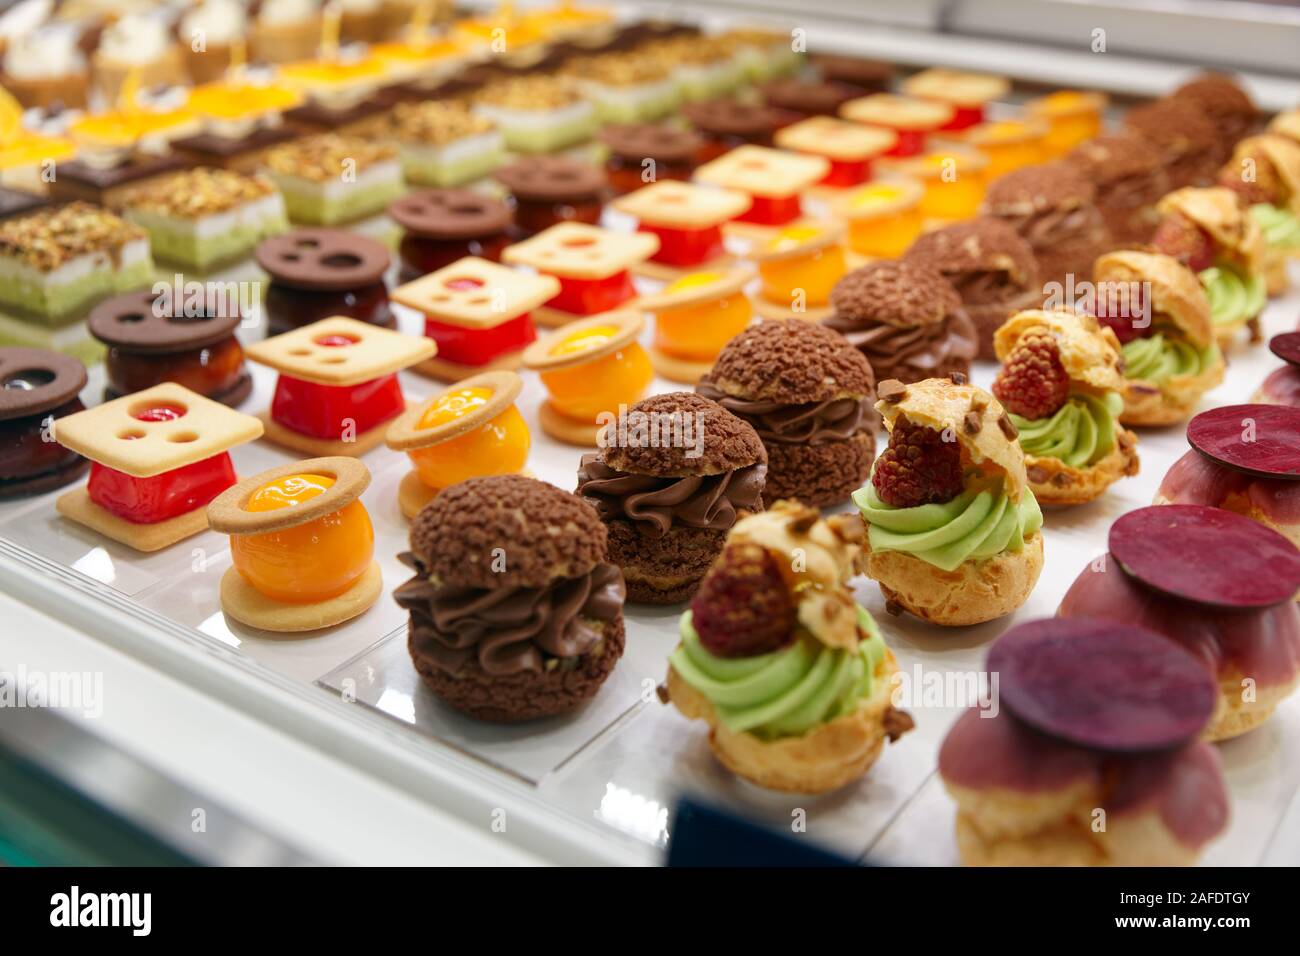 Various sweet items in window display in bakery or supermarket Stock Photo